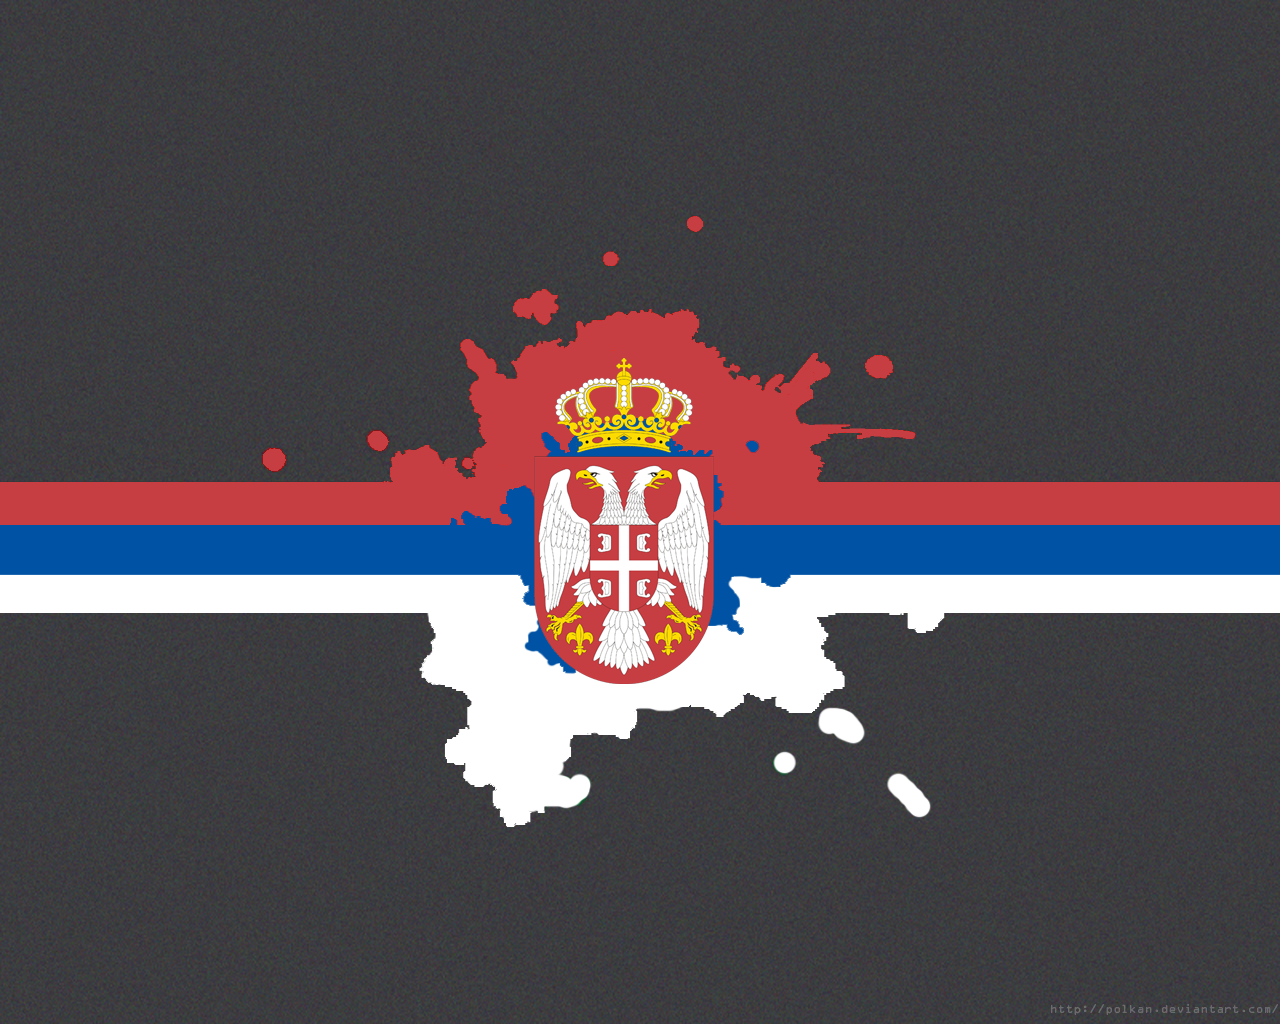 Serbian flag by polkan on DeviantArt